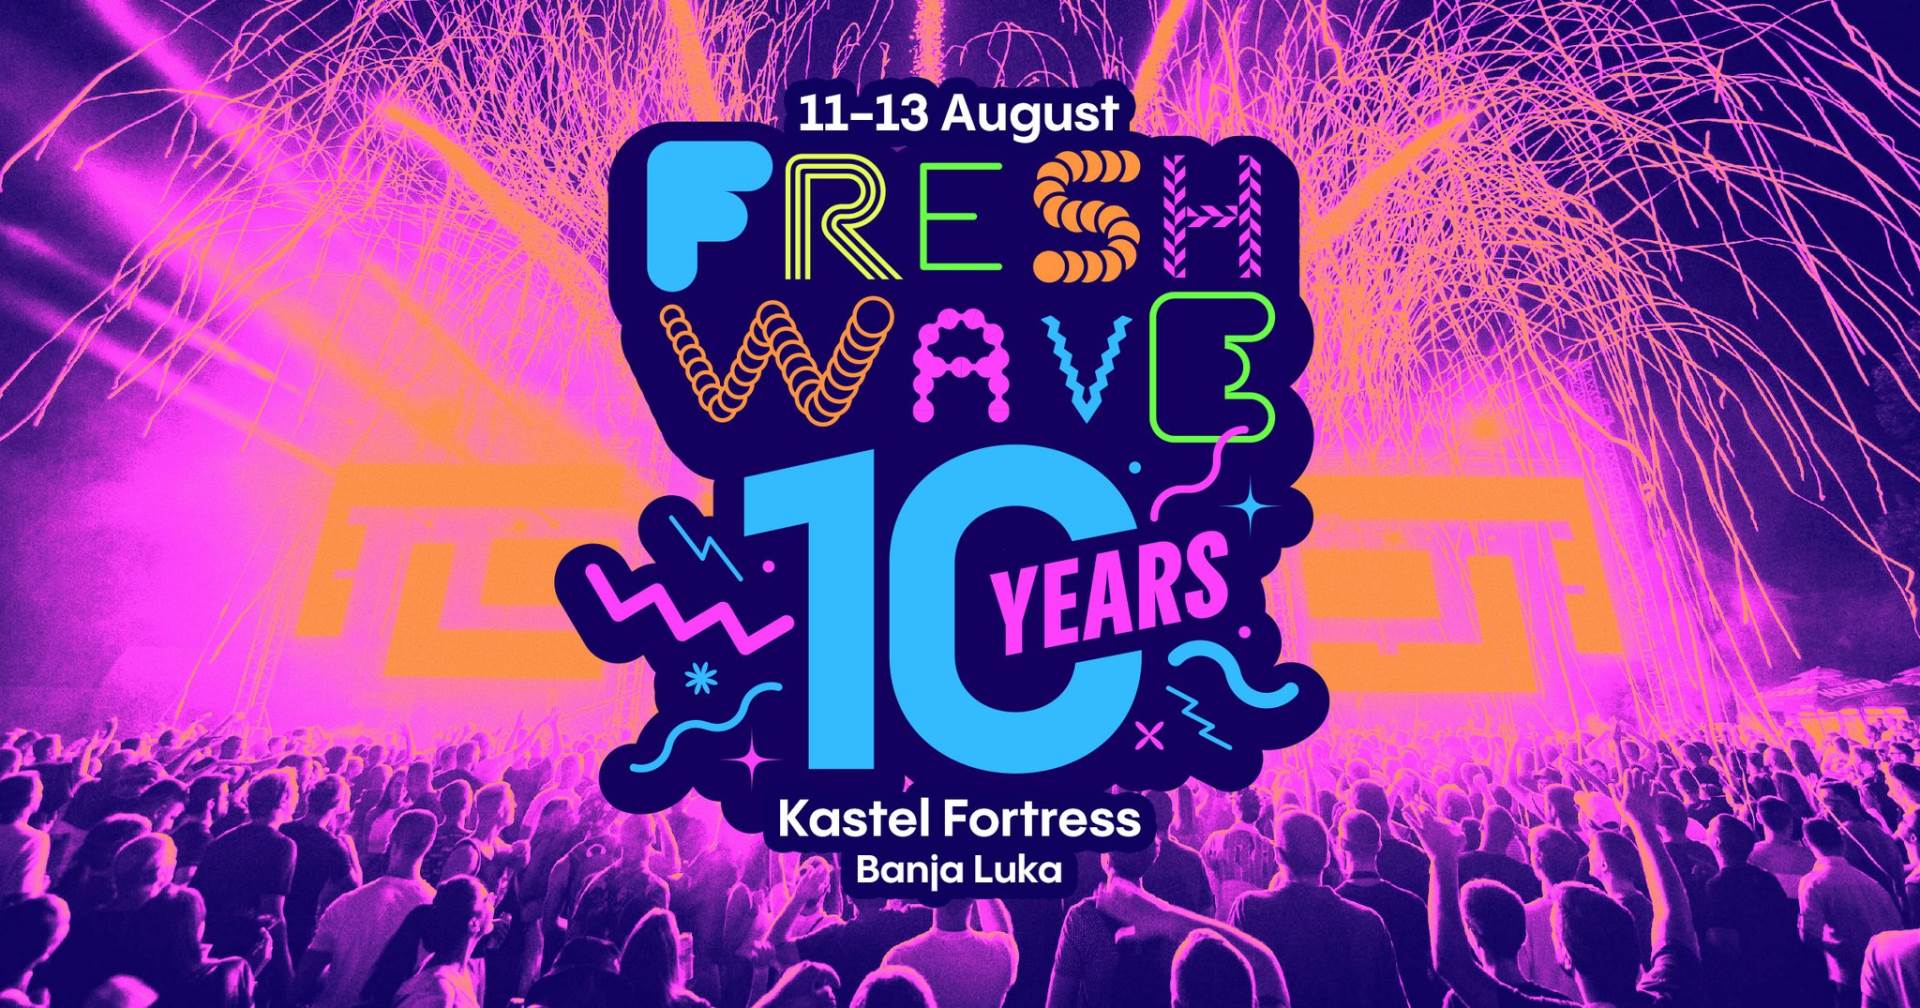  deseti fresh wave festival 